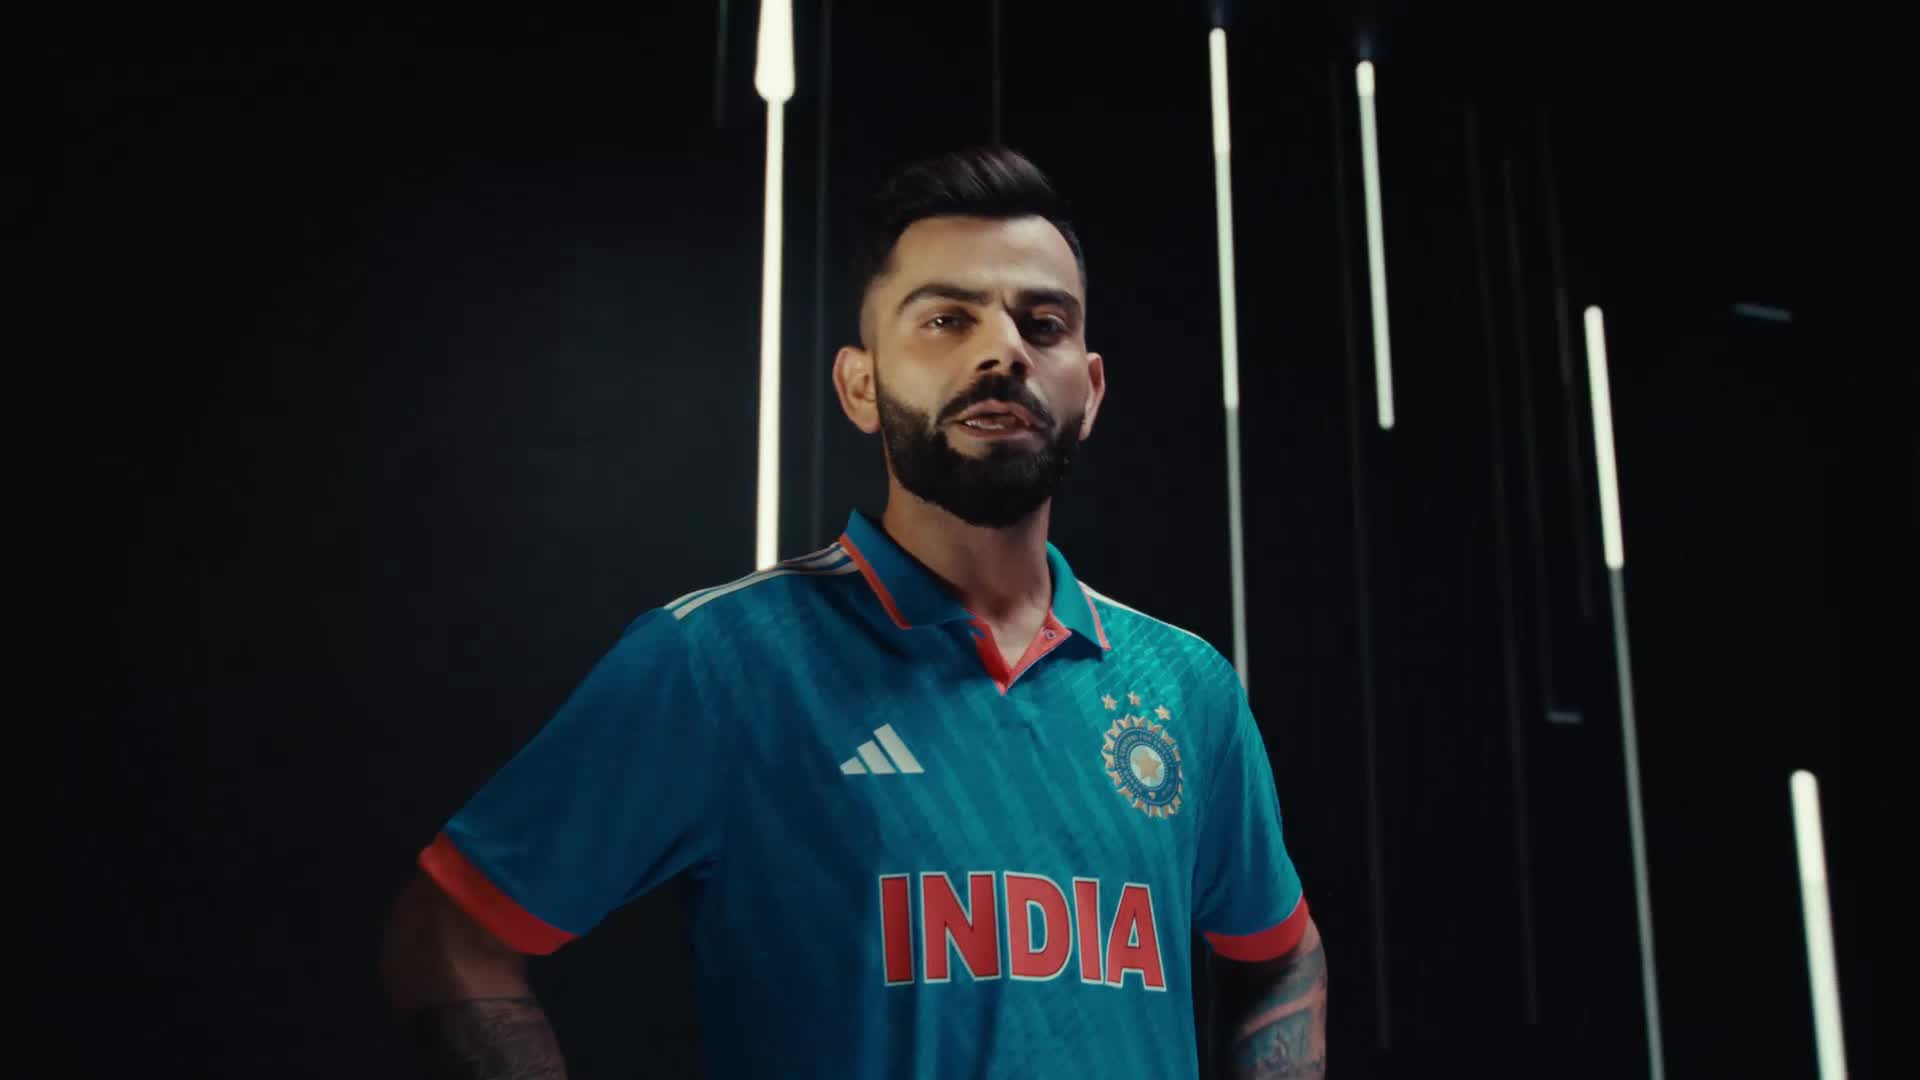 Official India Cricket Team kit | adidas India